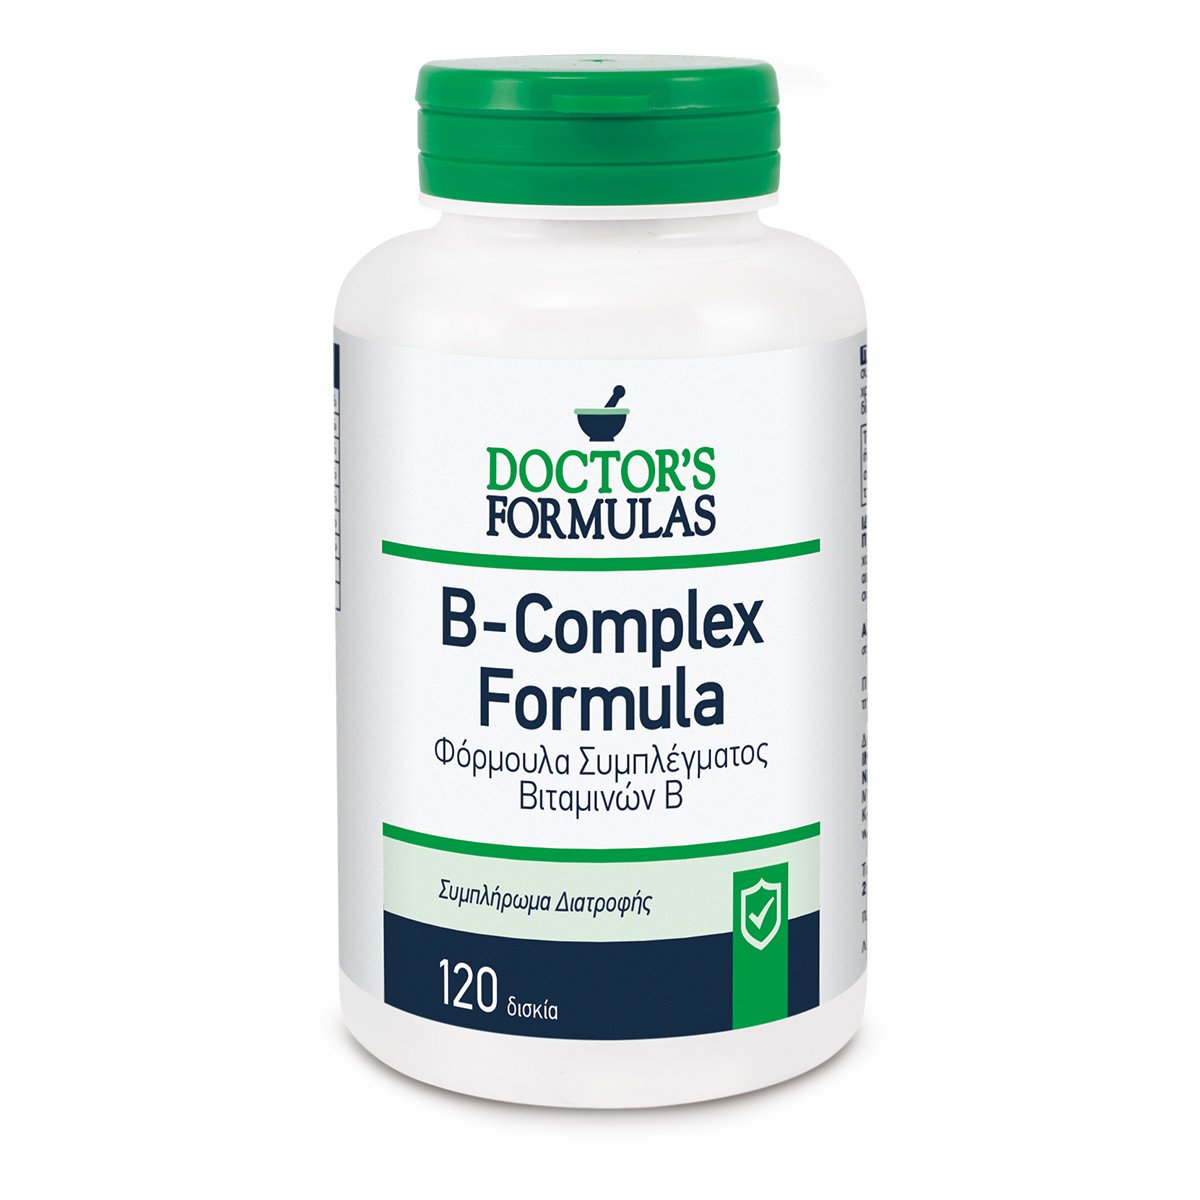 Doctor’s Formulas B-Complex Formula 120tabs